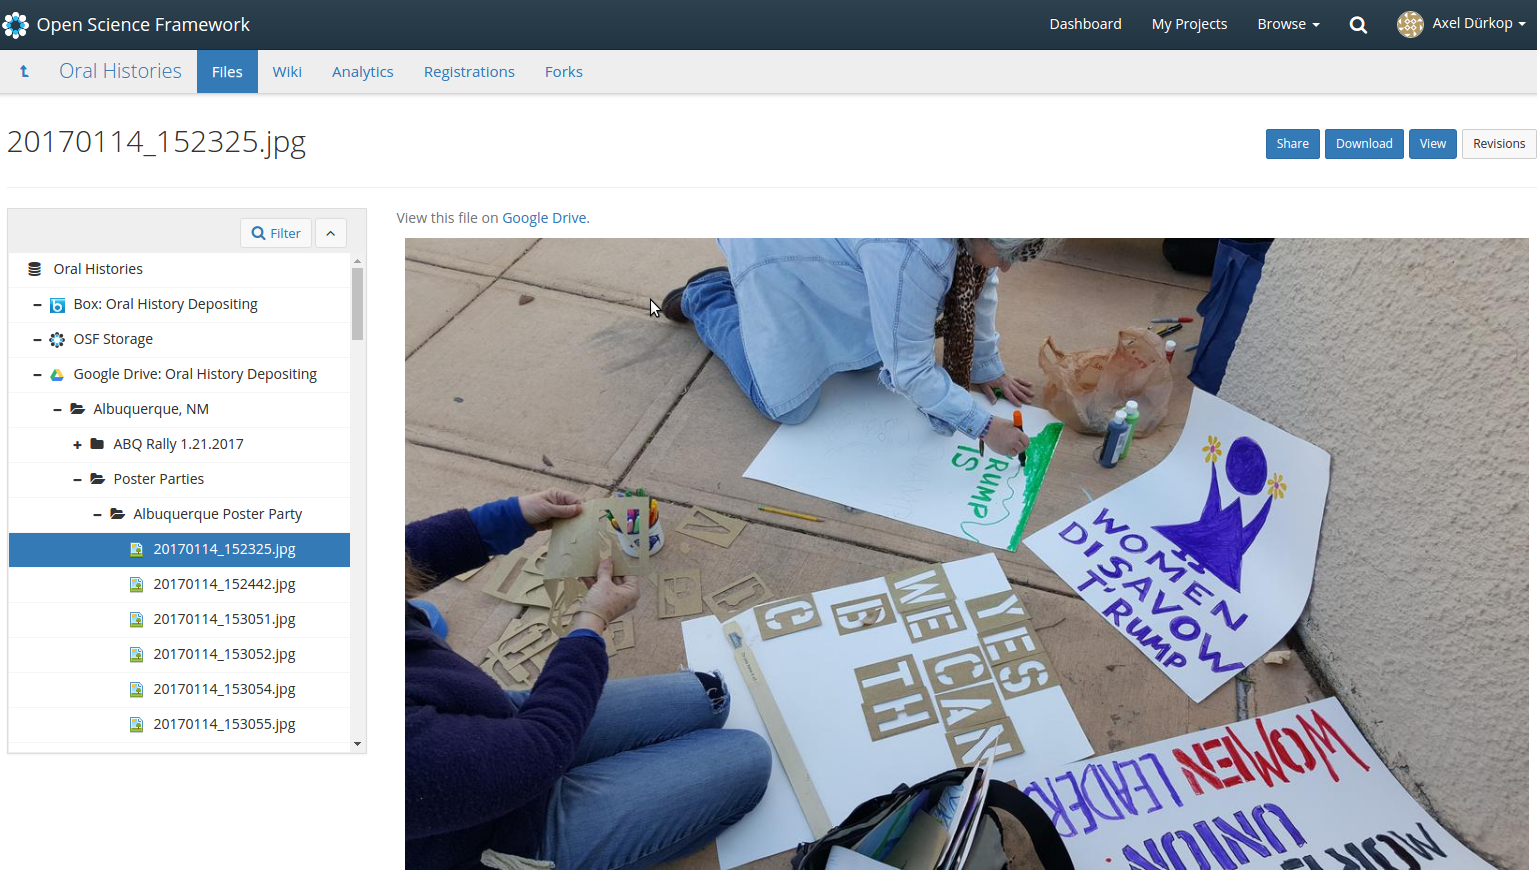 Screenshot eines aktuellen Projekts im OSF, “Women’s March on Washington Archives Project”